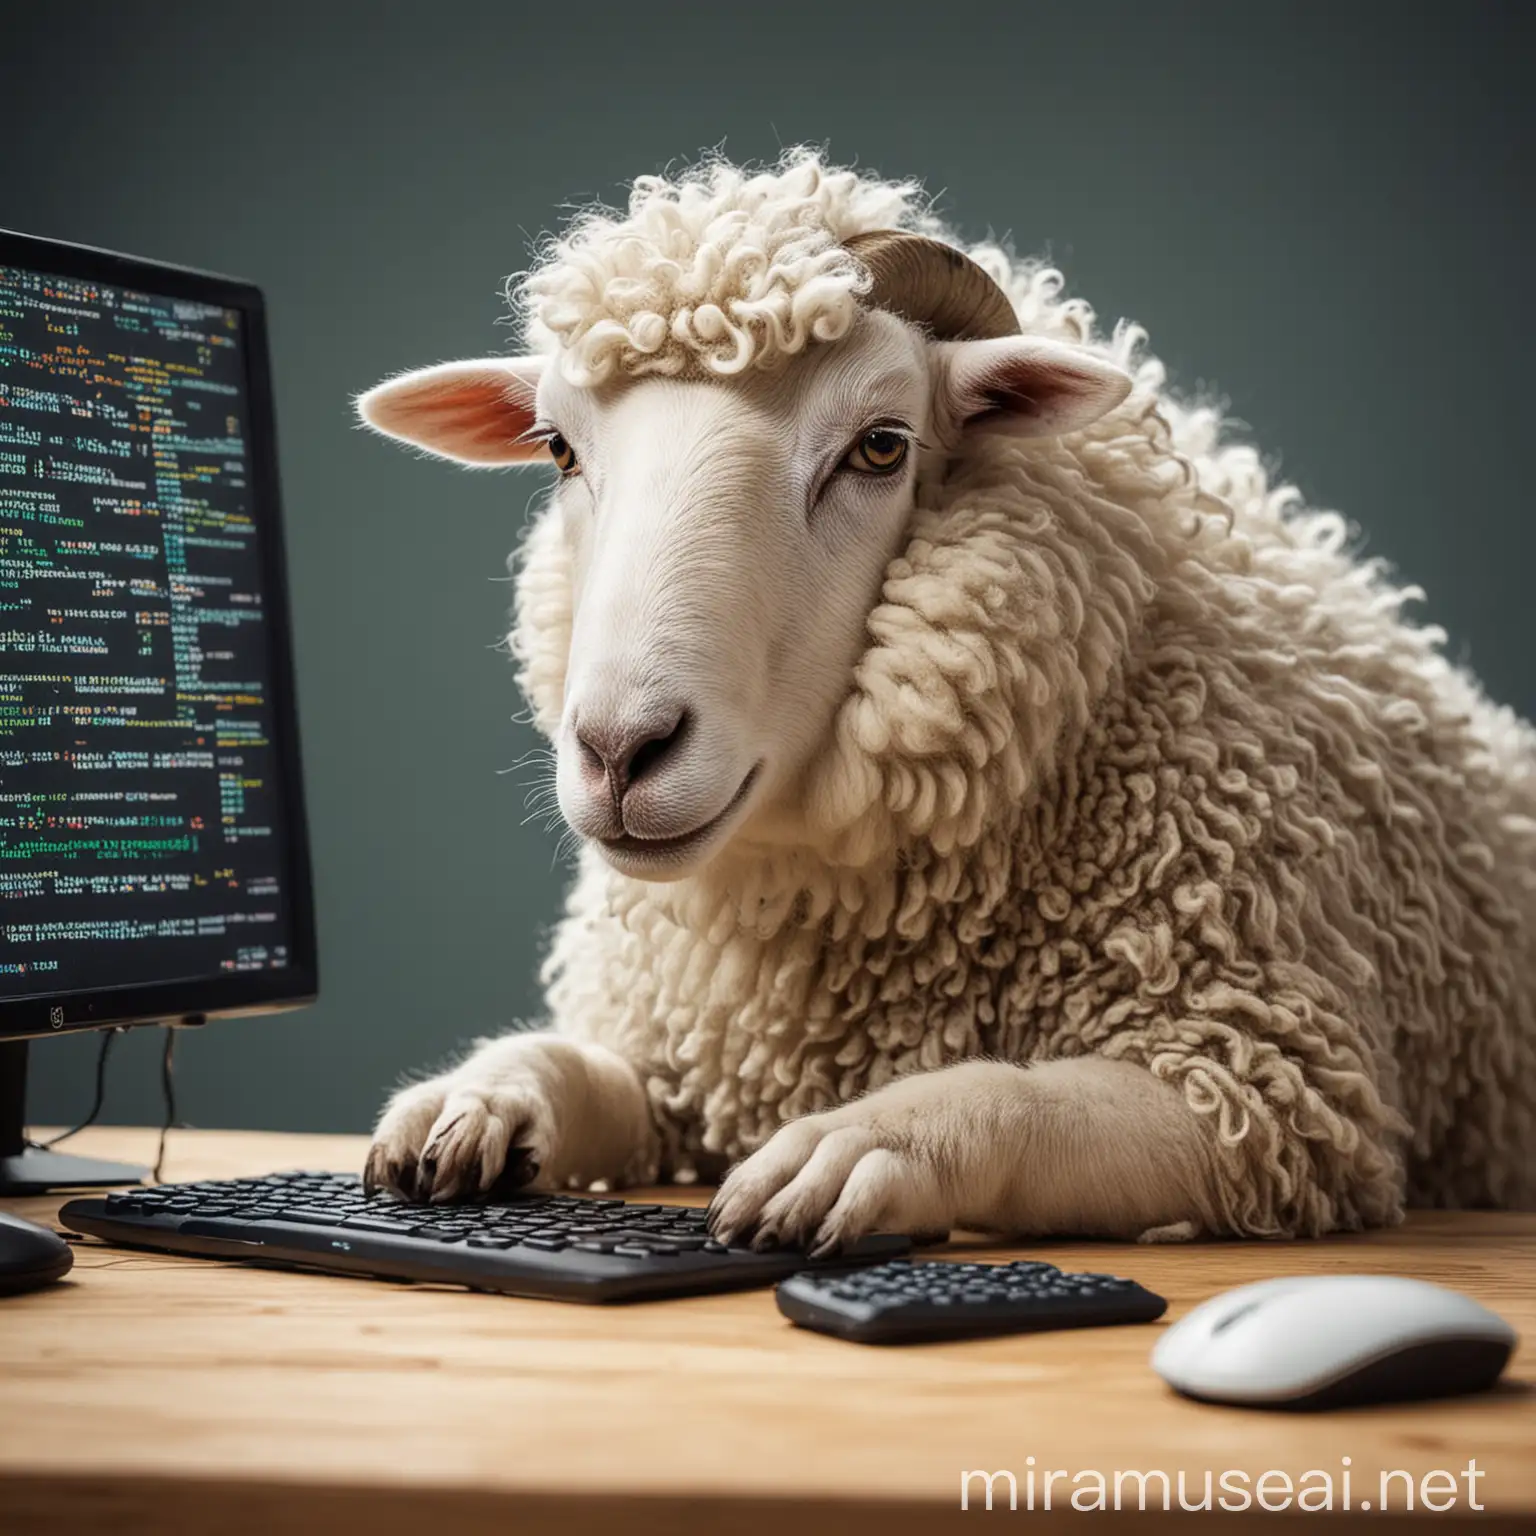 a programmer sheep coding a program and focusing
